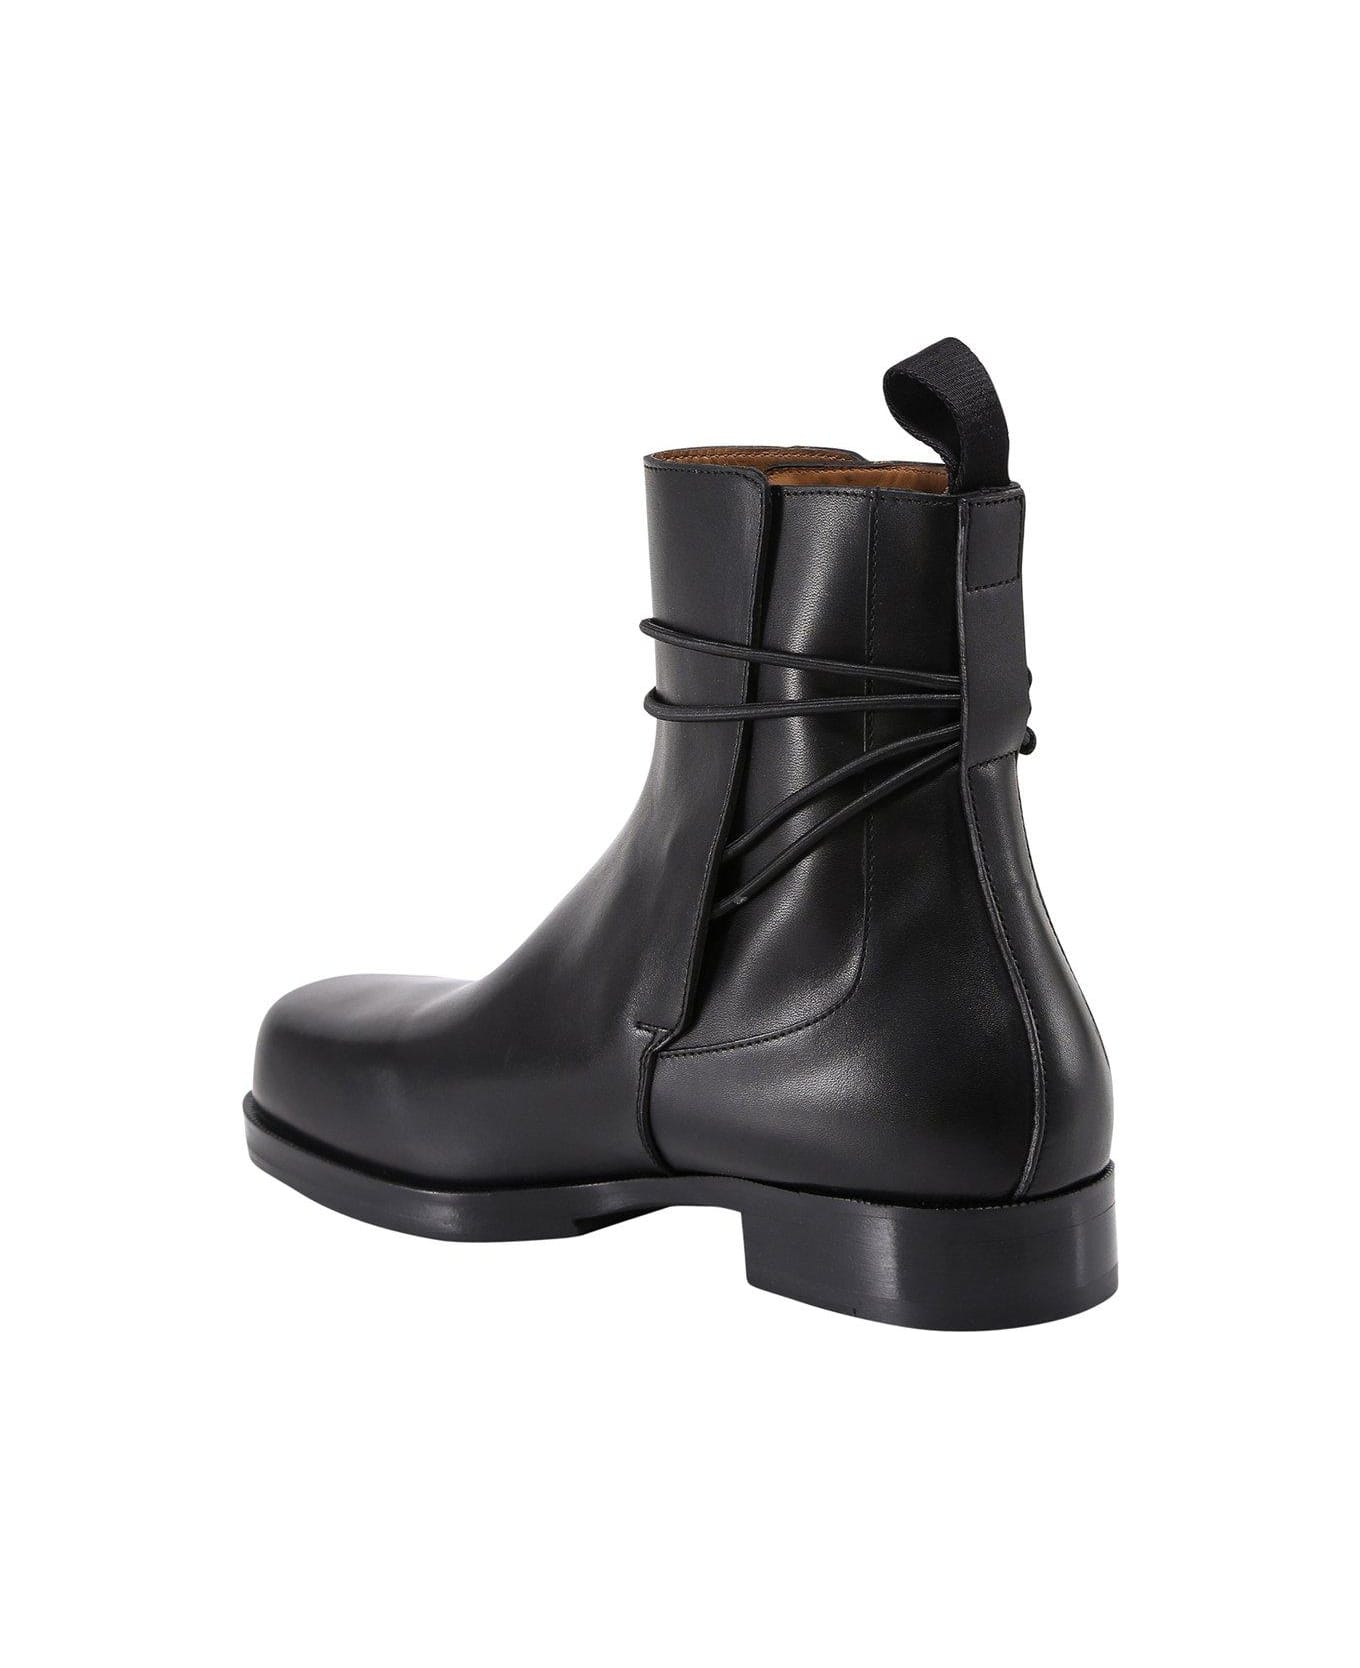 1017 ALYX 9SM Vibram Sole Chelsea Boots - Black ブーツ